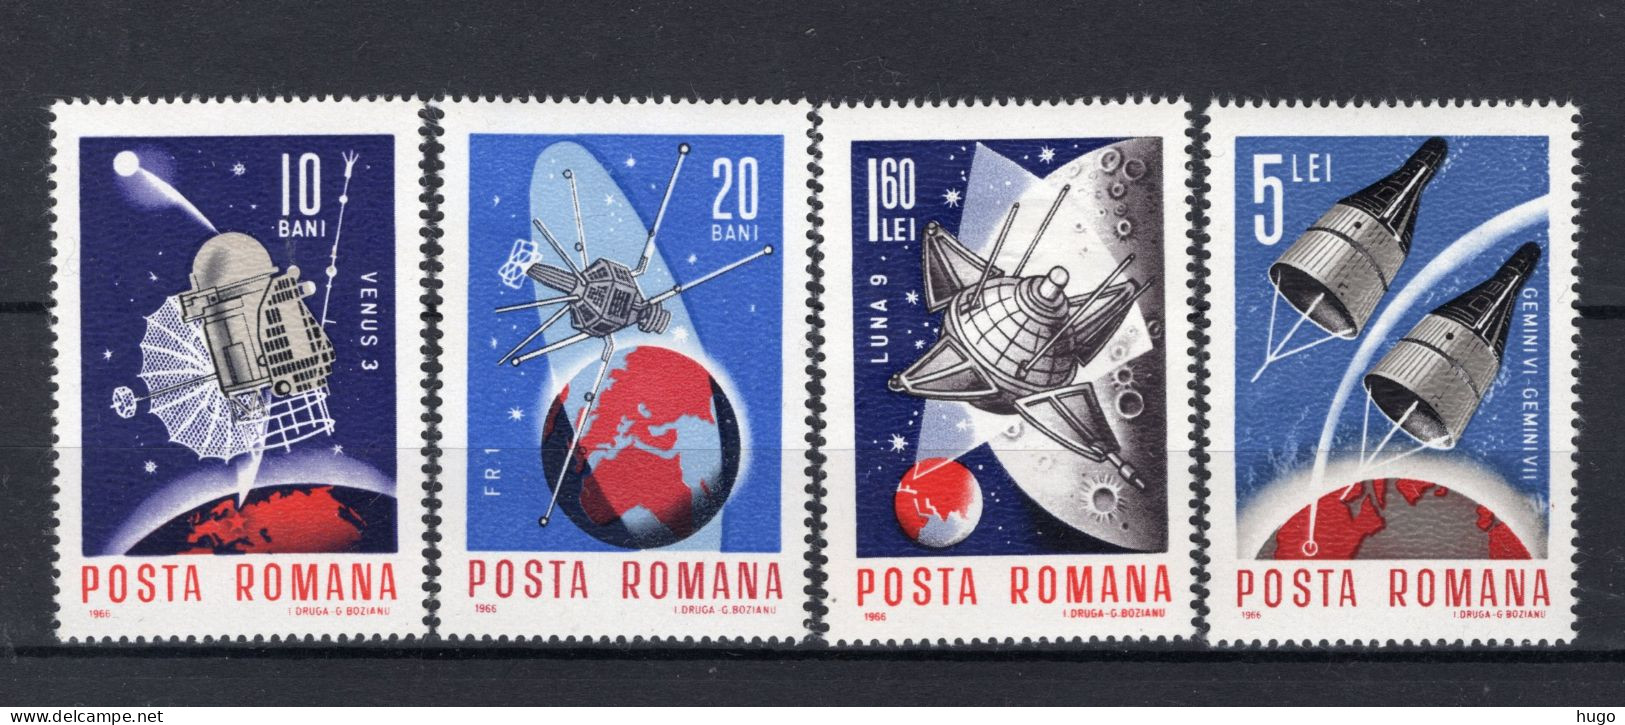 ROEMENIE Yt. 2206/2209 MH 1966 - Unused Stamps